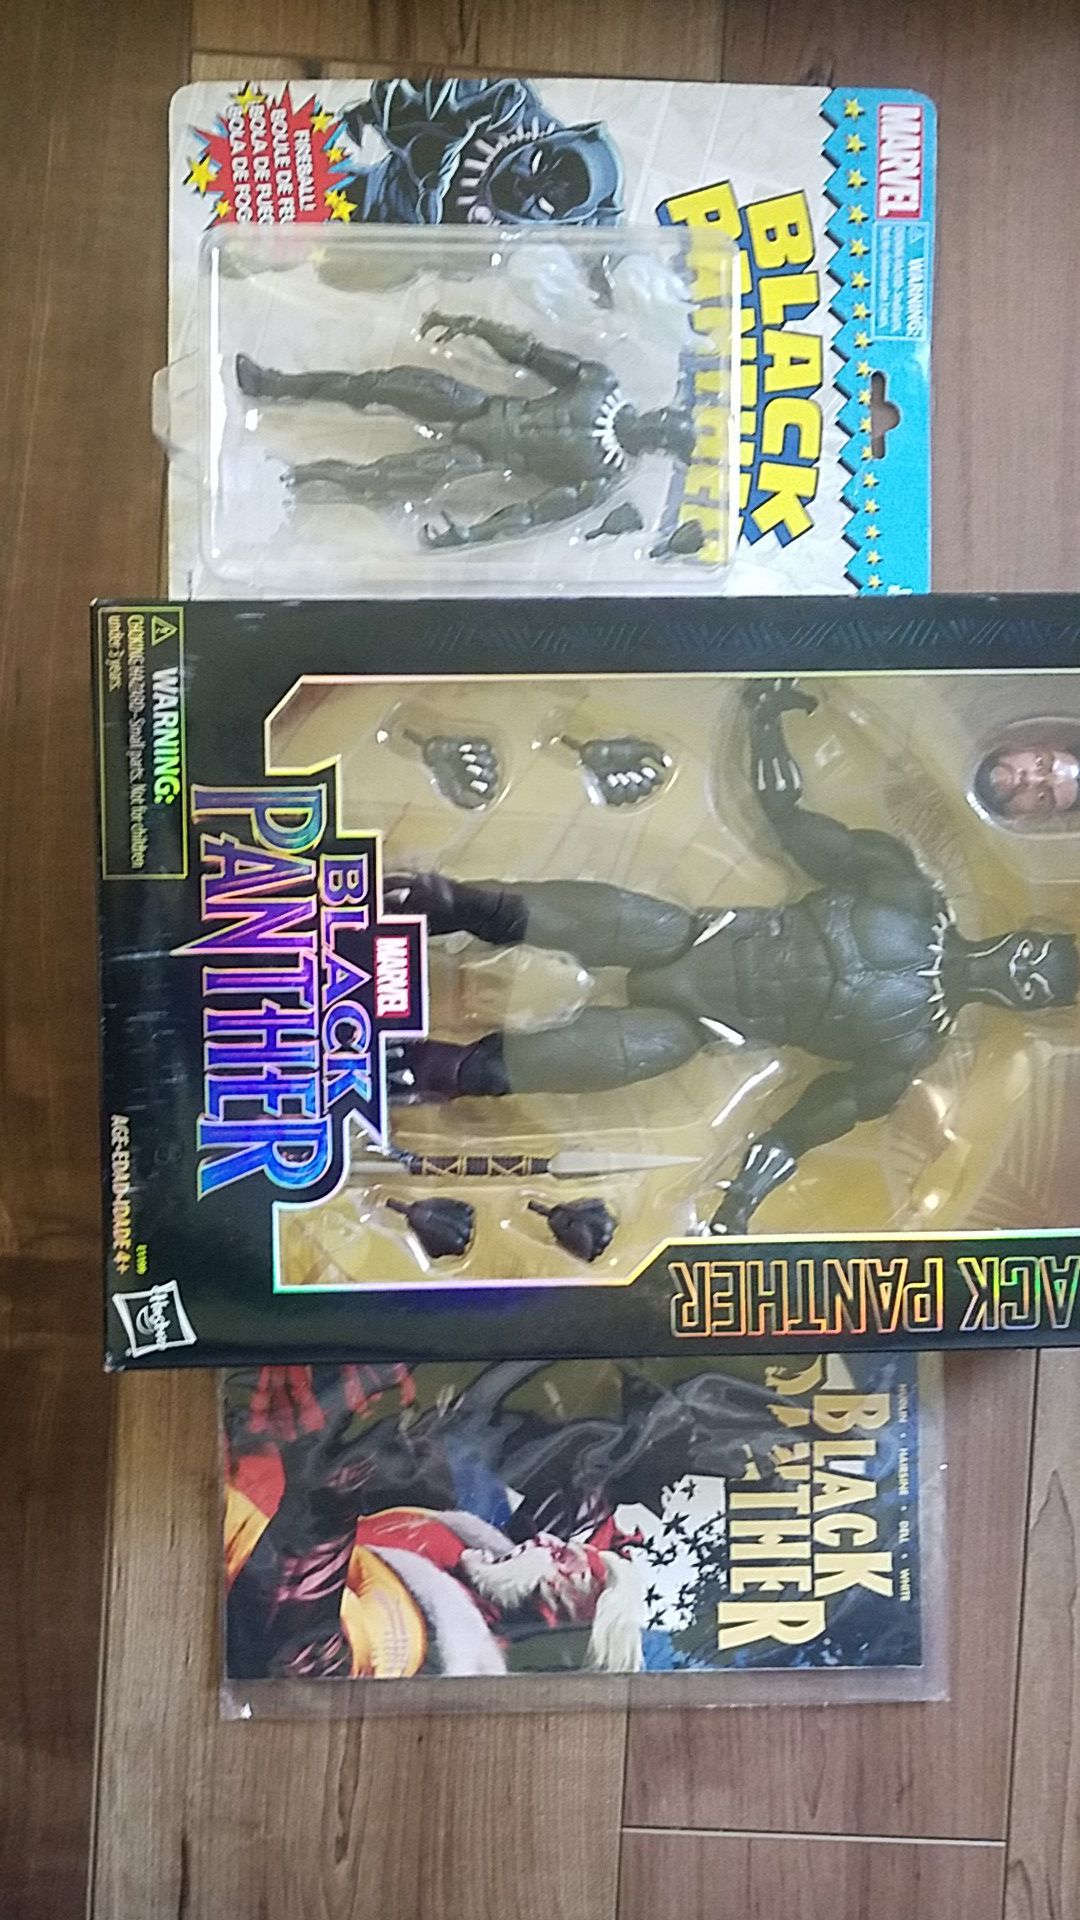 Black Panther action figures plus comic book